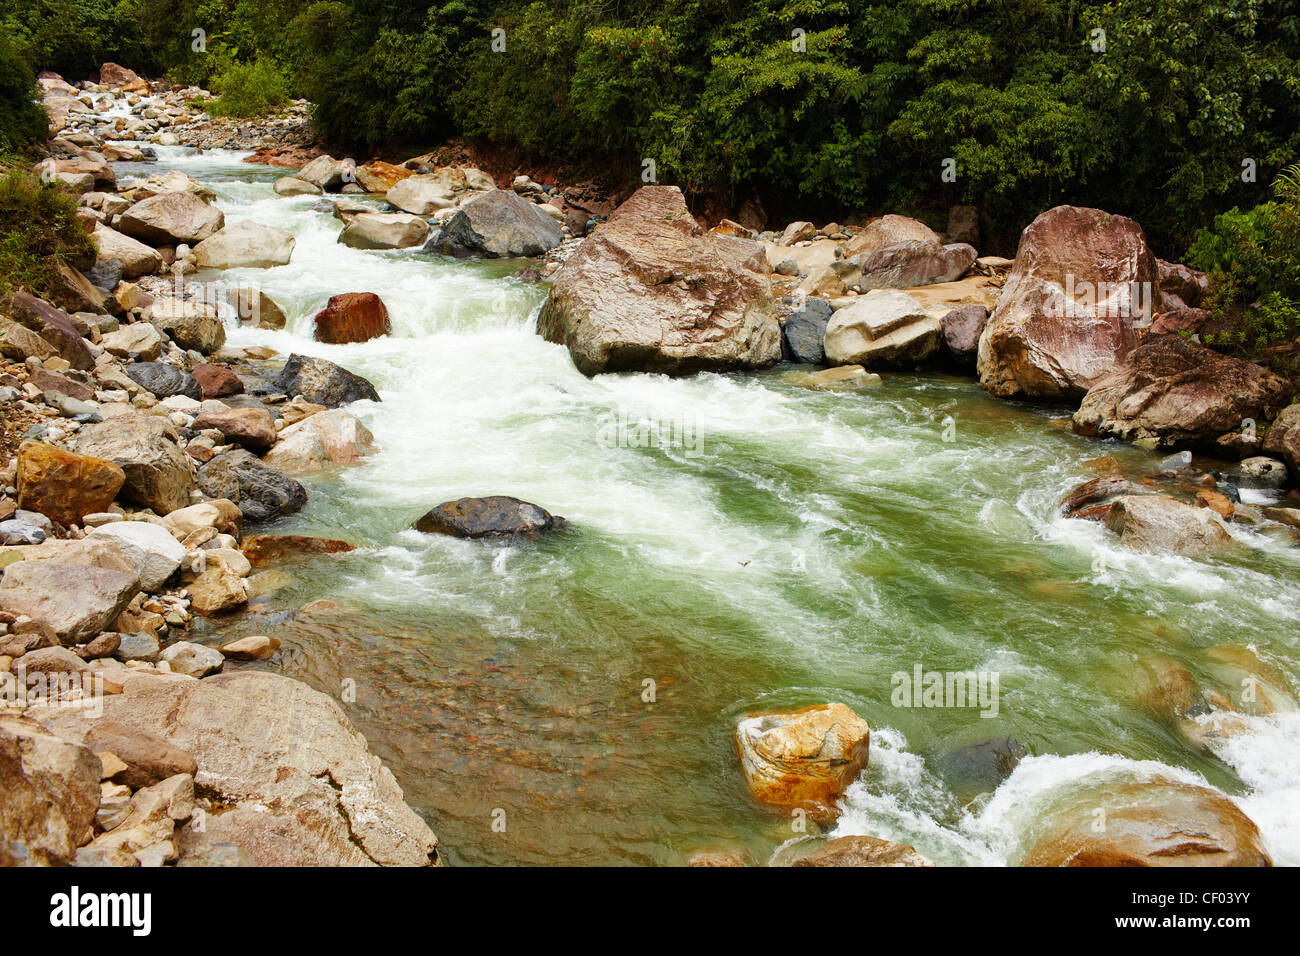 River in the jungles, waterfalls, rocks, stones Stock Photo